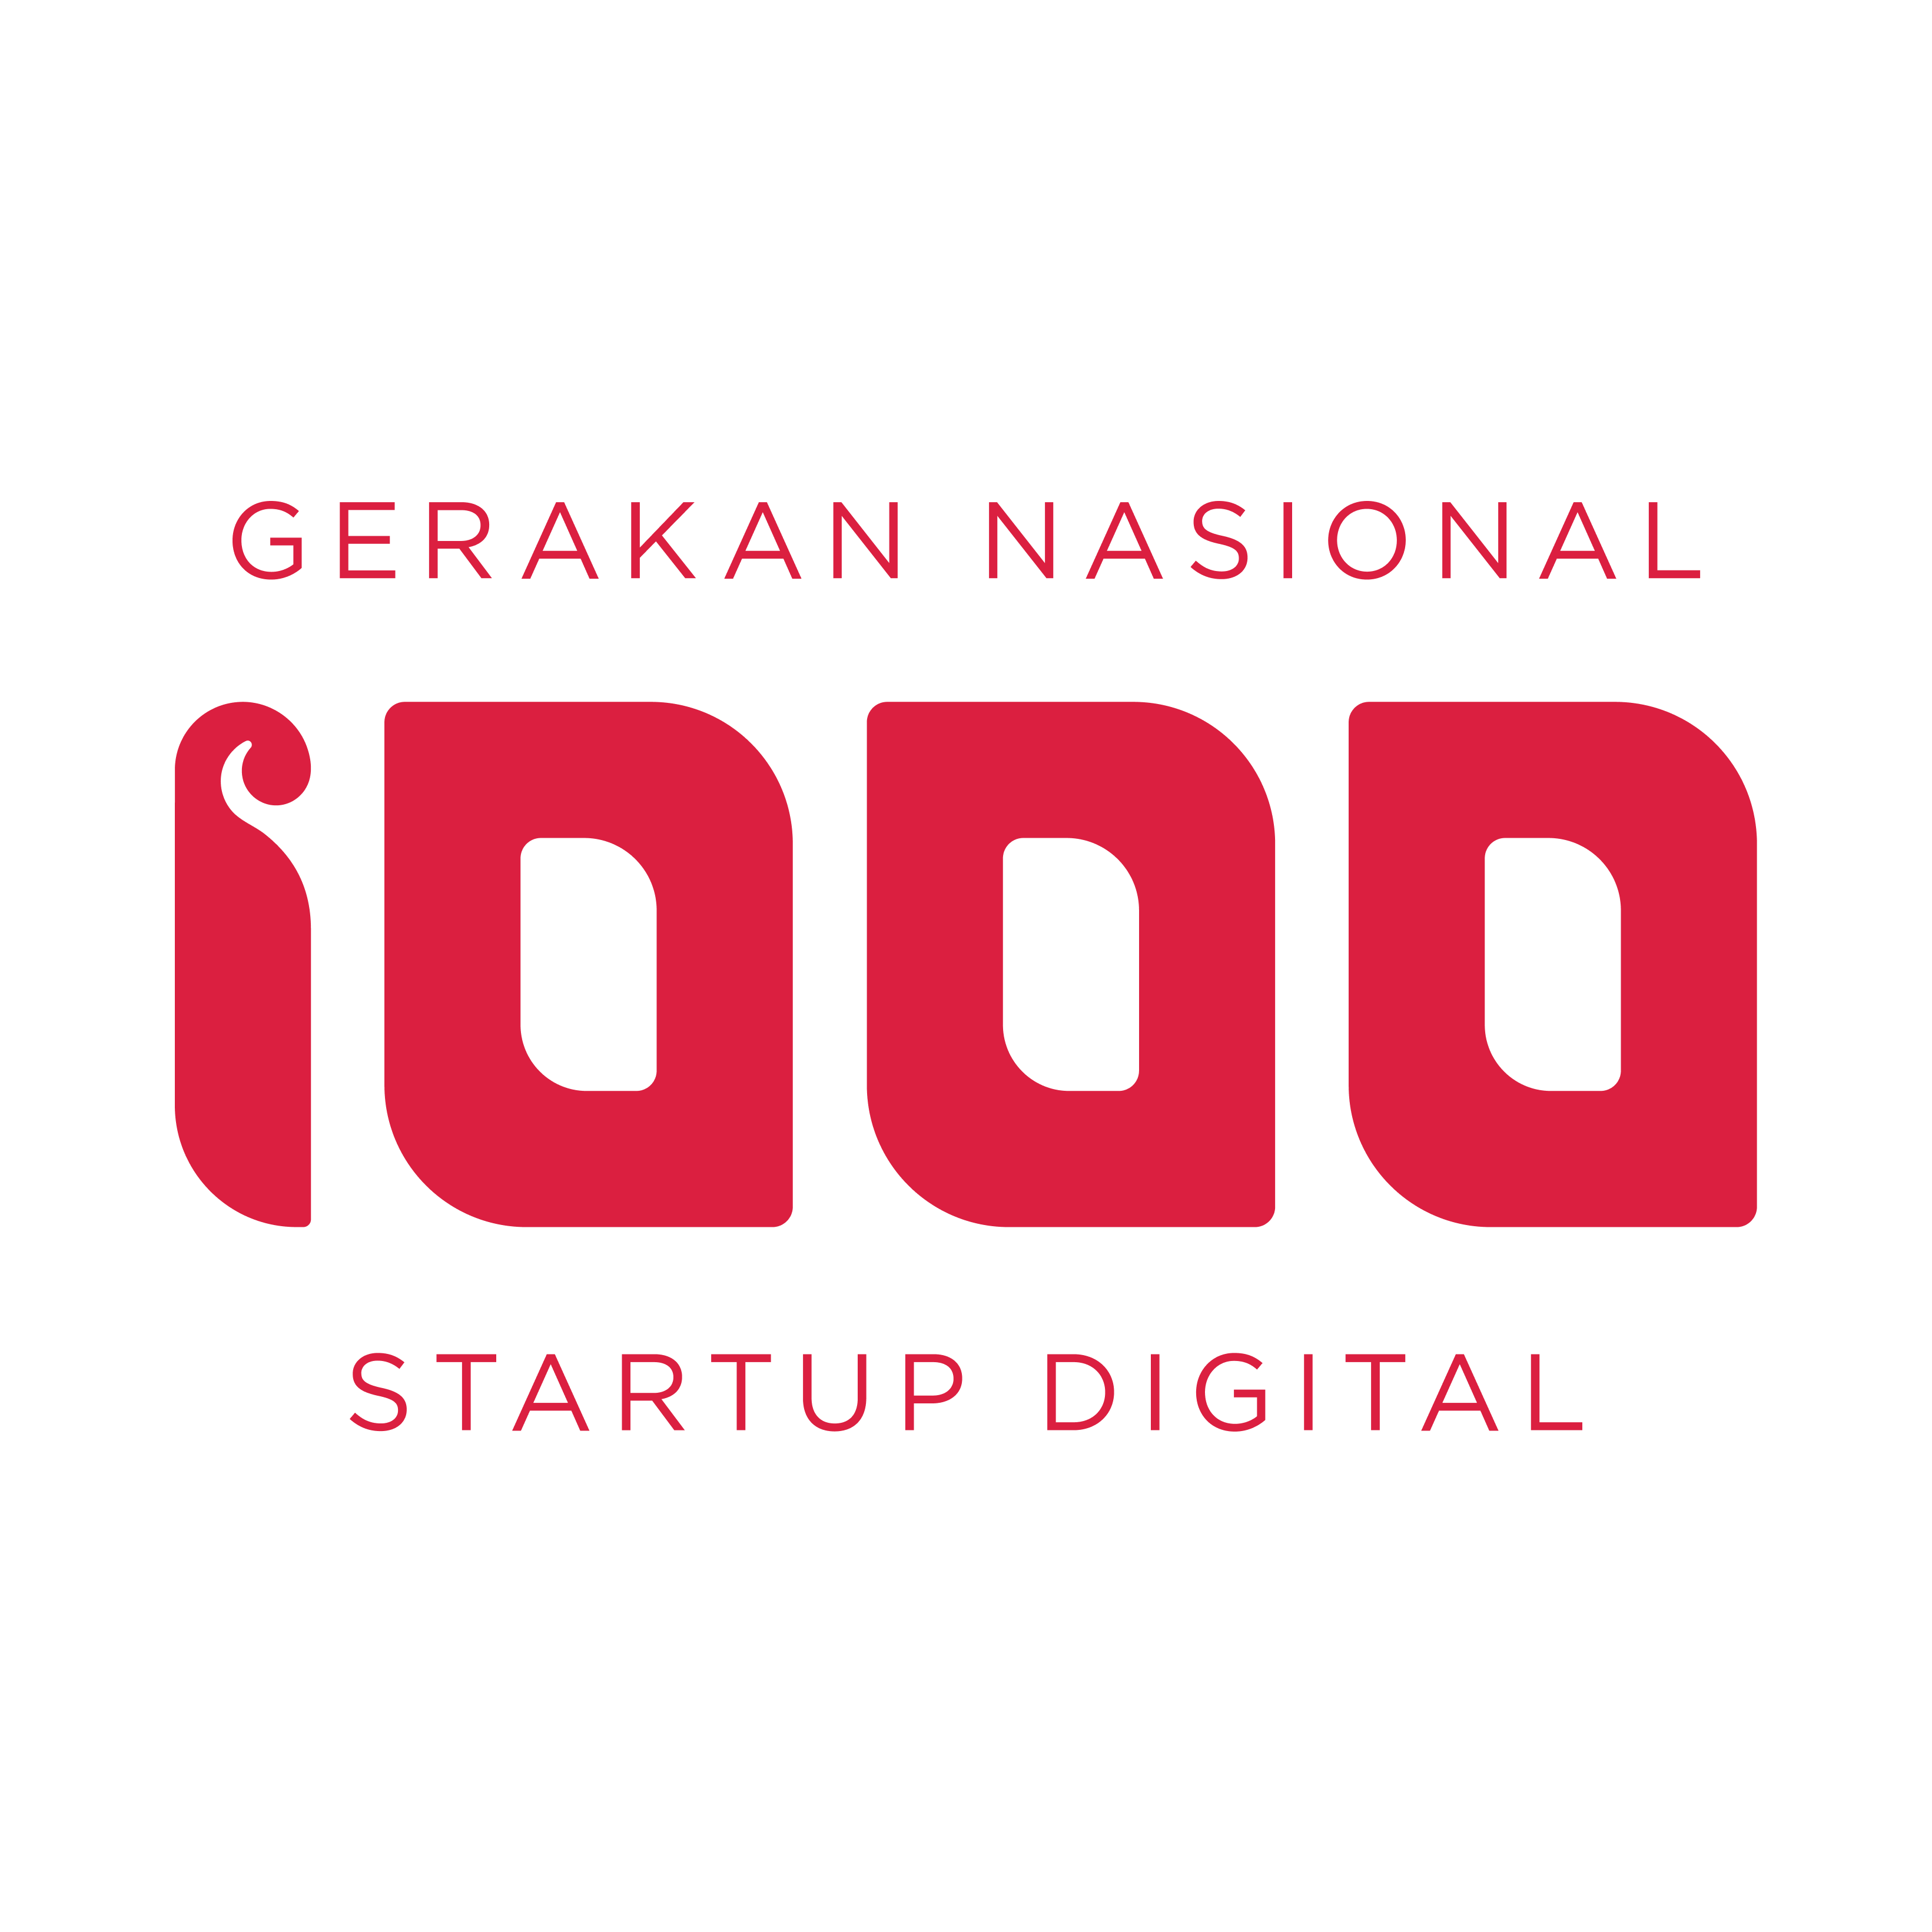 1000-startup